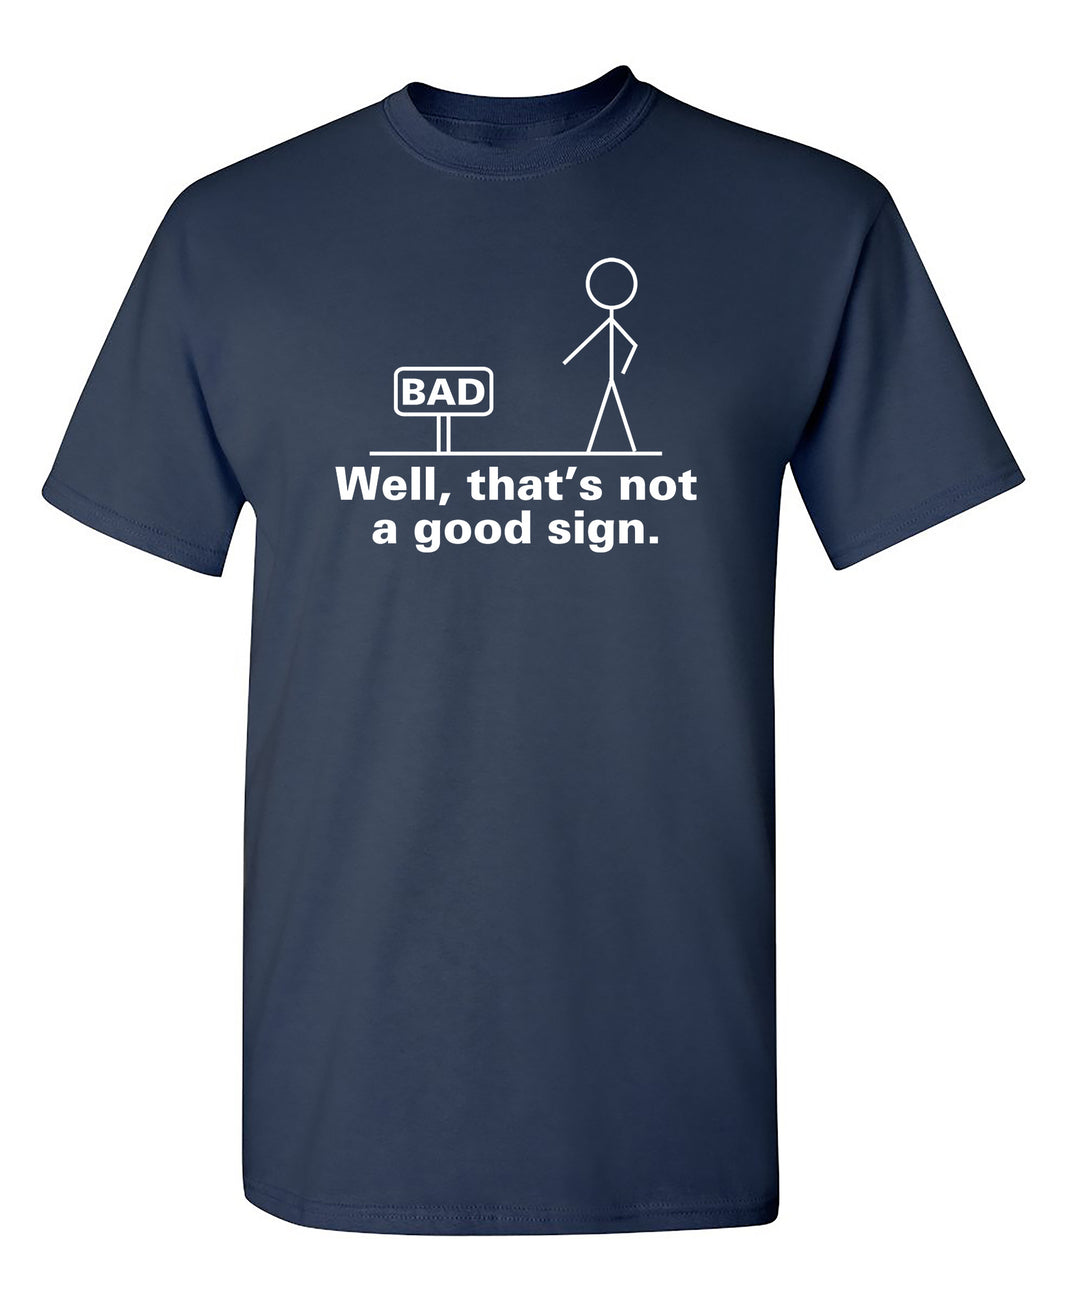 Feelin Good Tees: Funny T Shirts for Men | Humor and Novelty Tees ...